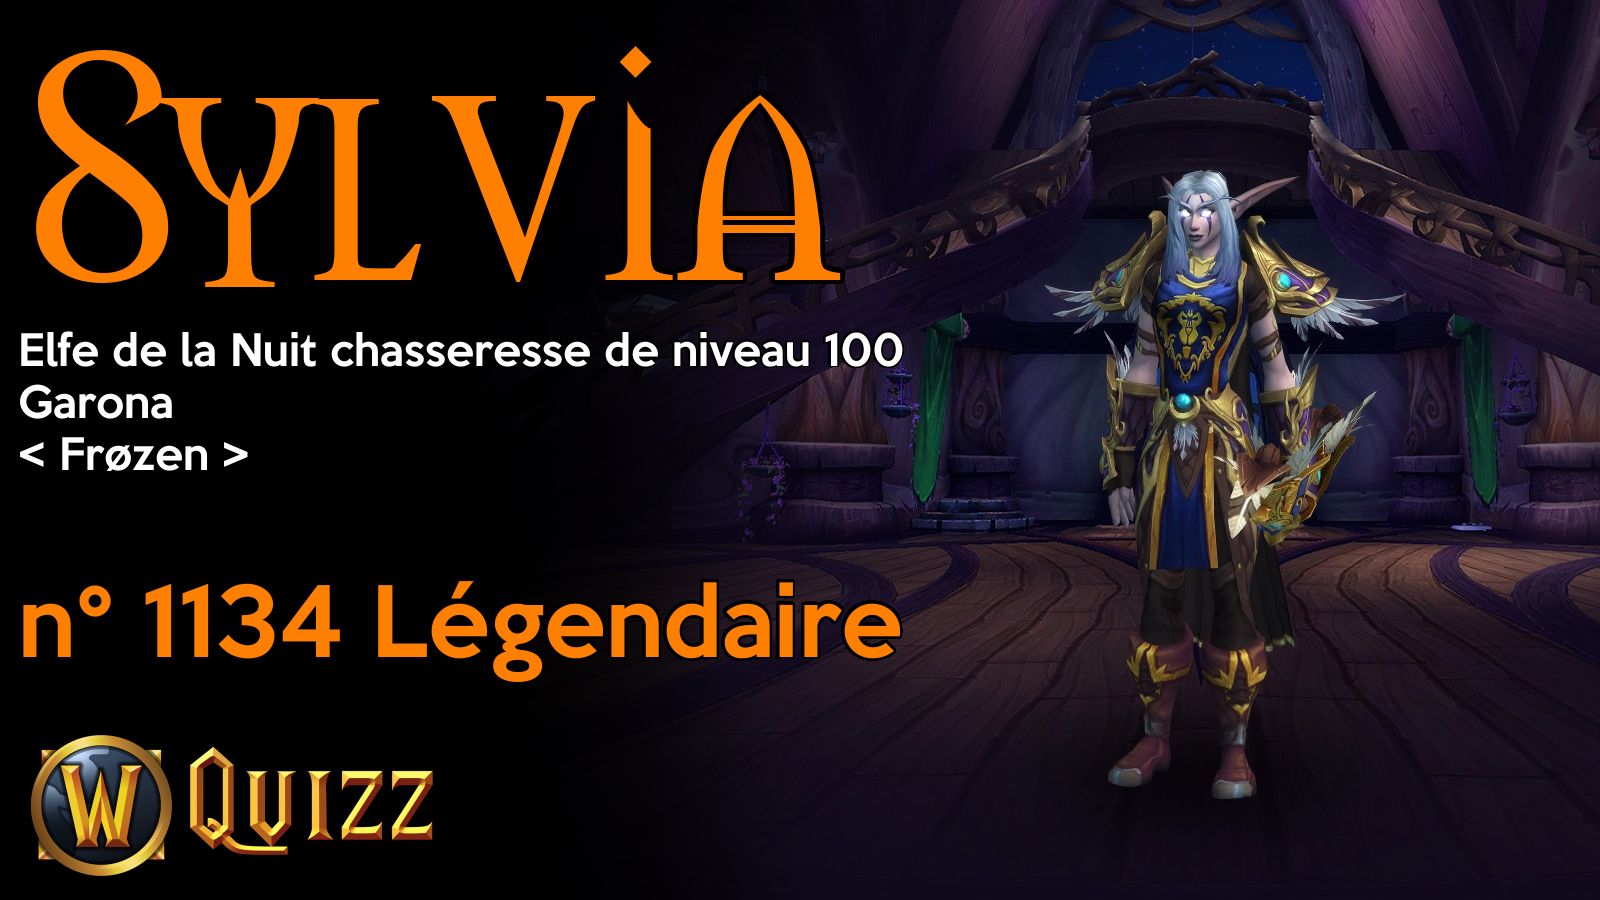 Sylvia, Elfe de la Nuit chasseresse de niveau 100, Garona